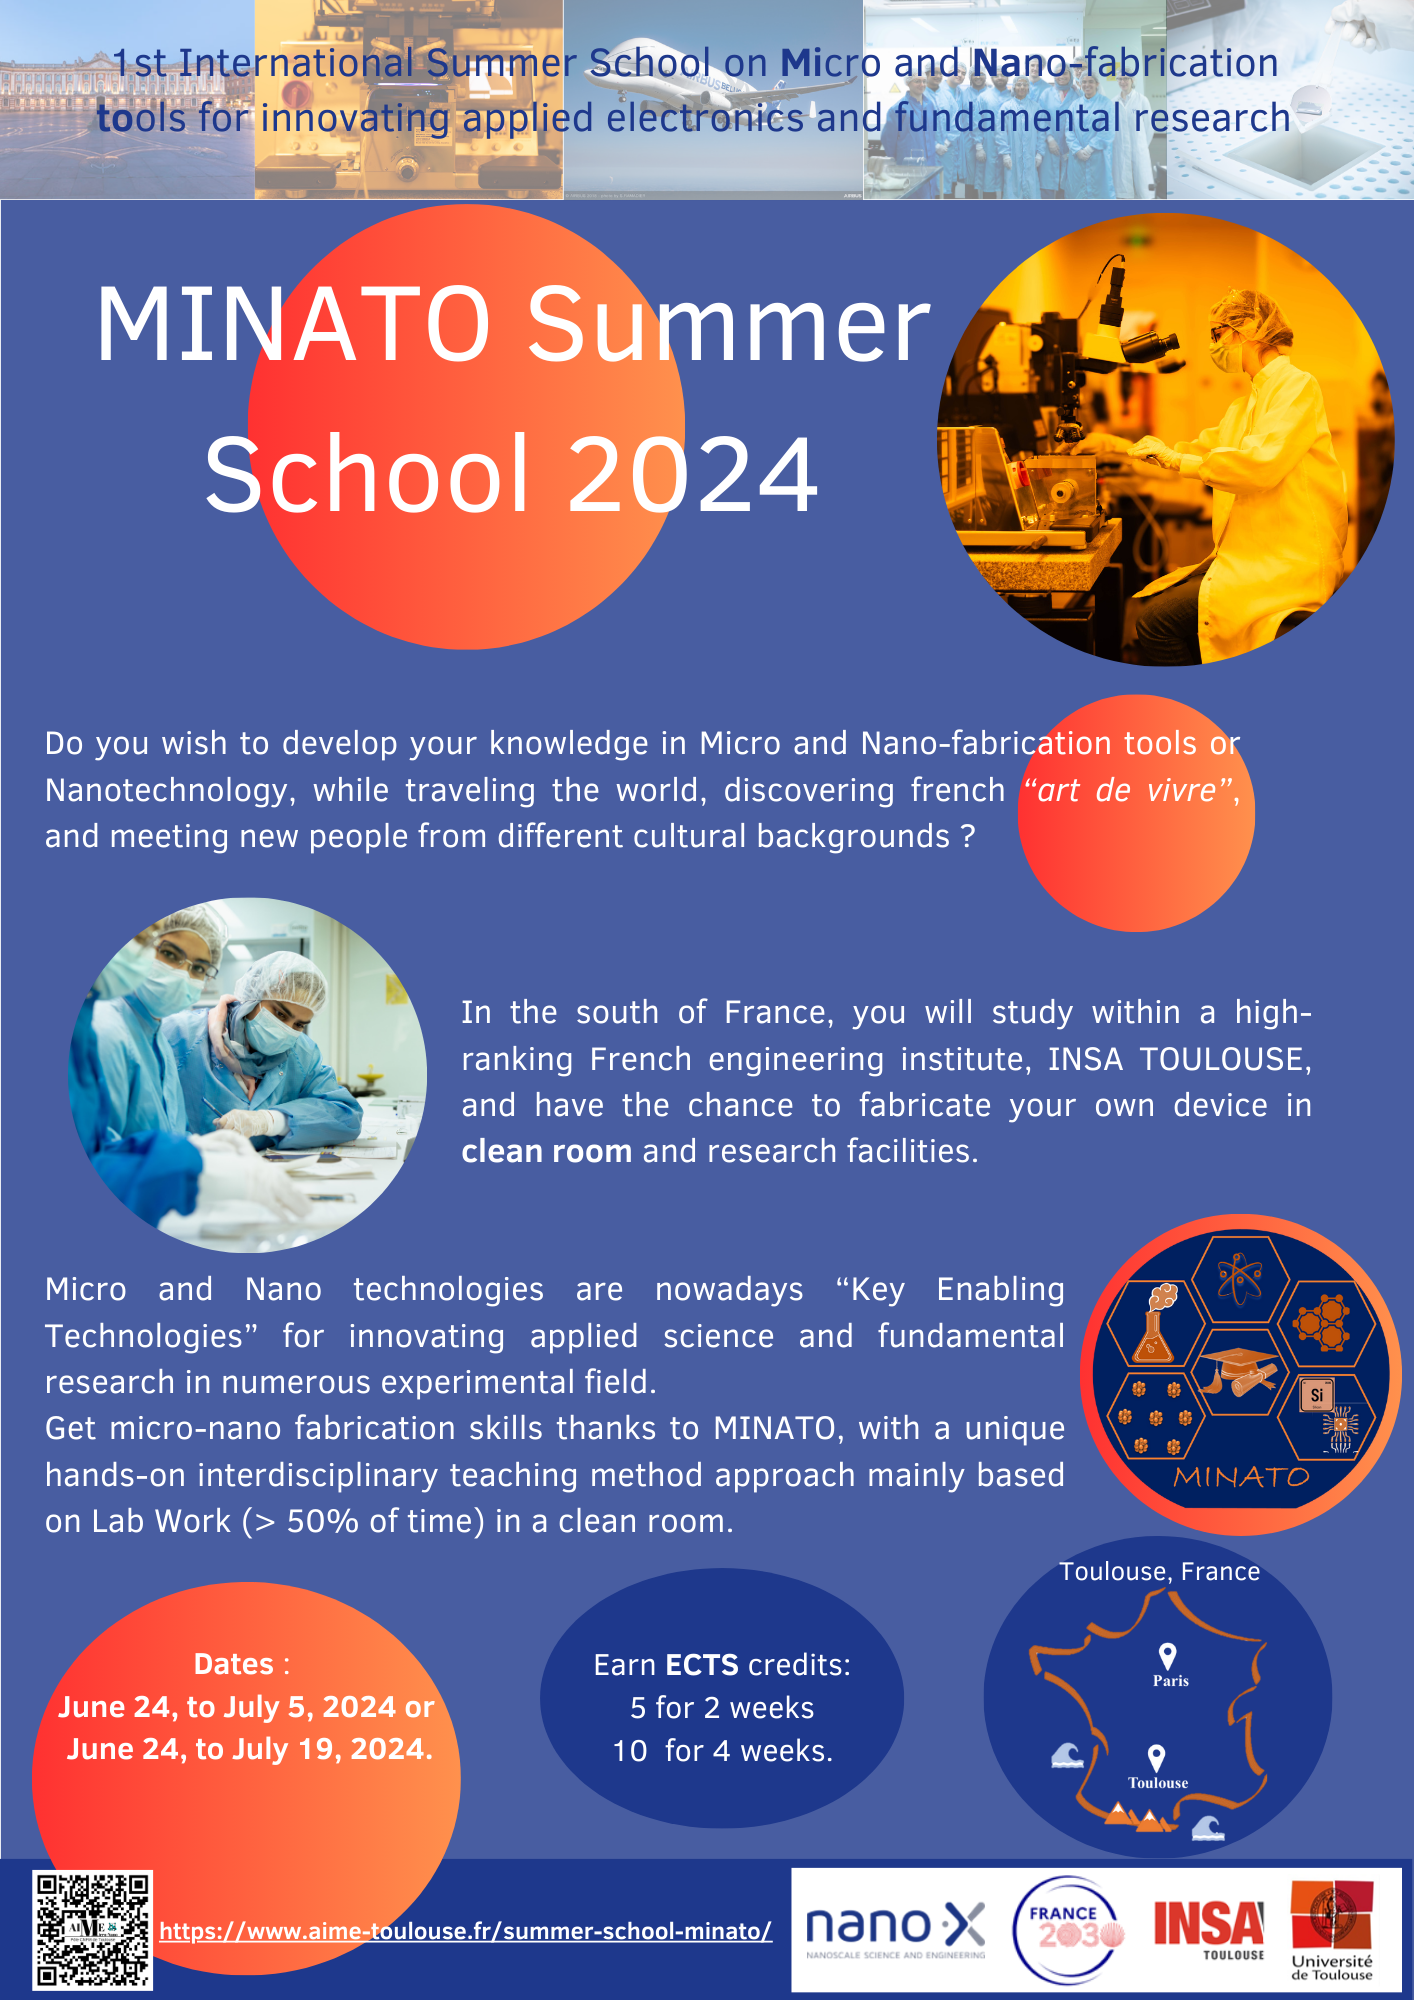 Registration is now open for MINATO summer school